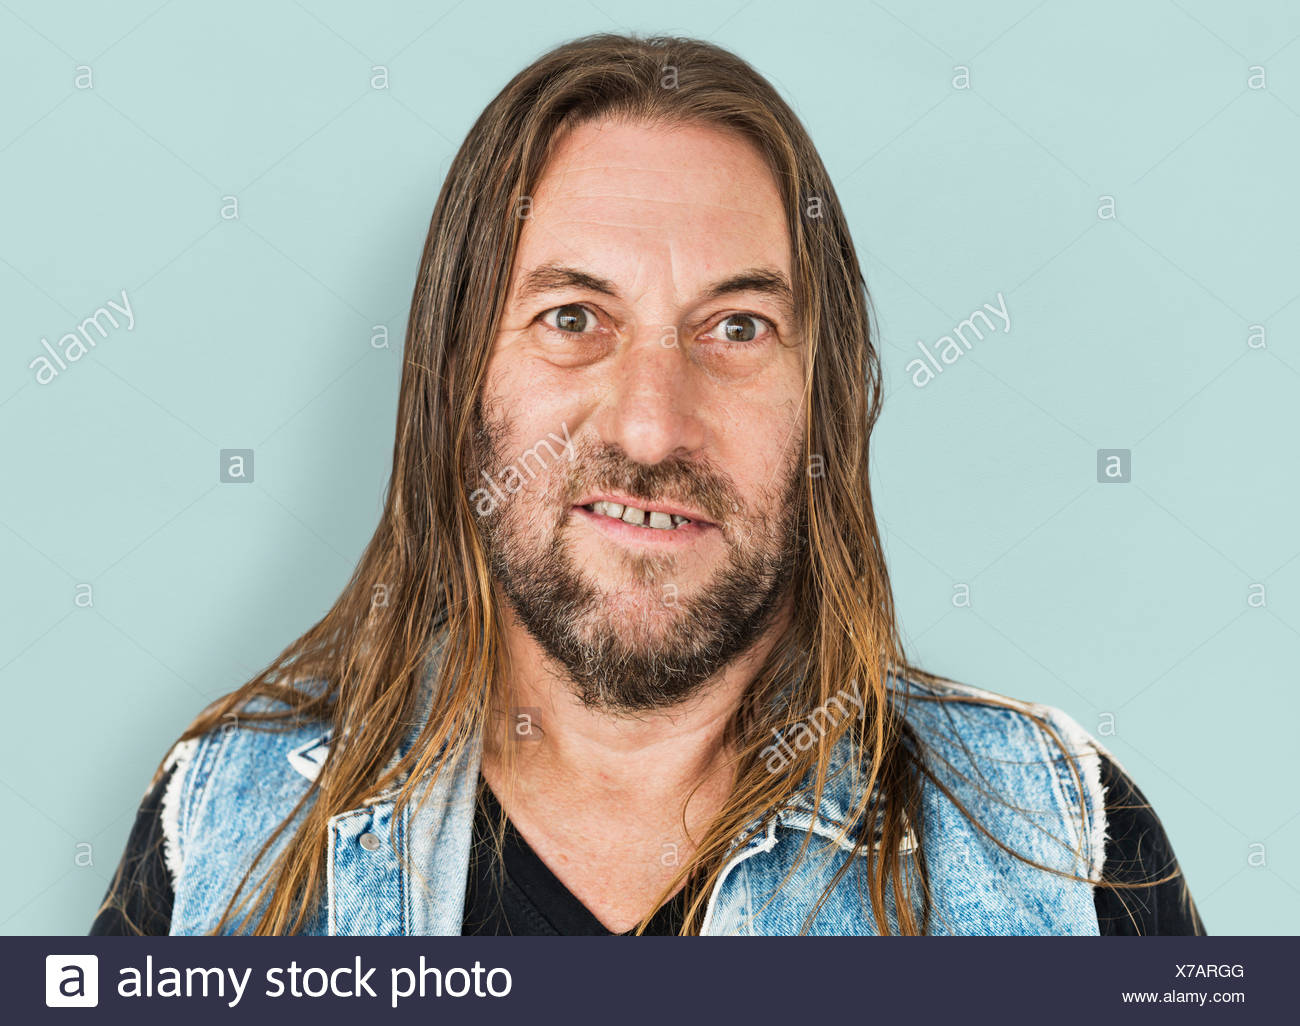 Mann Lange Haare Frisur Lachelnd Hohn Portrat Konzept Stockfotografie Alamy